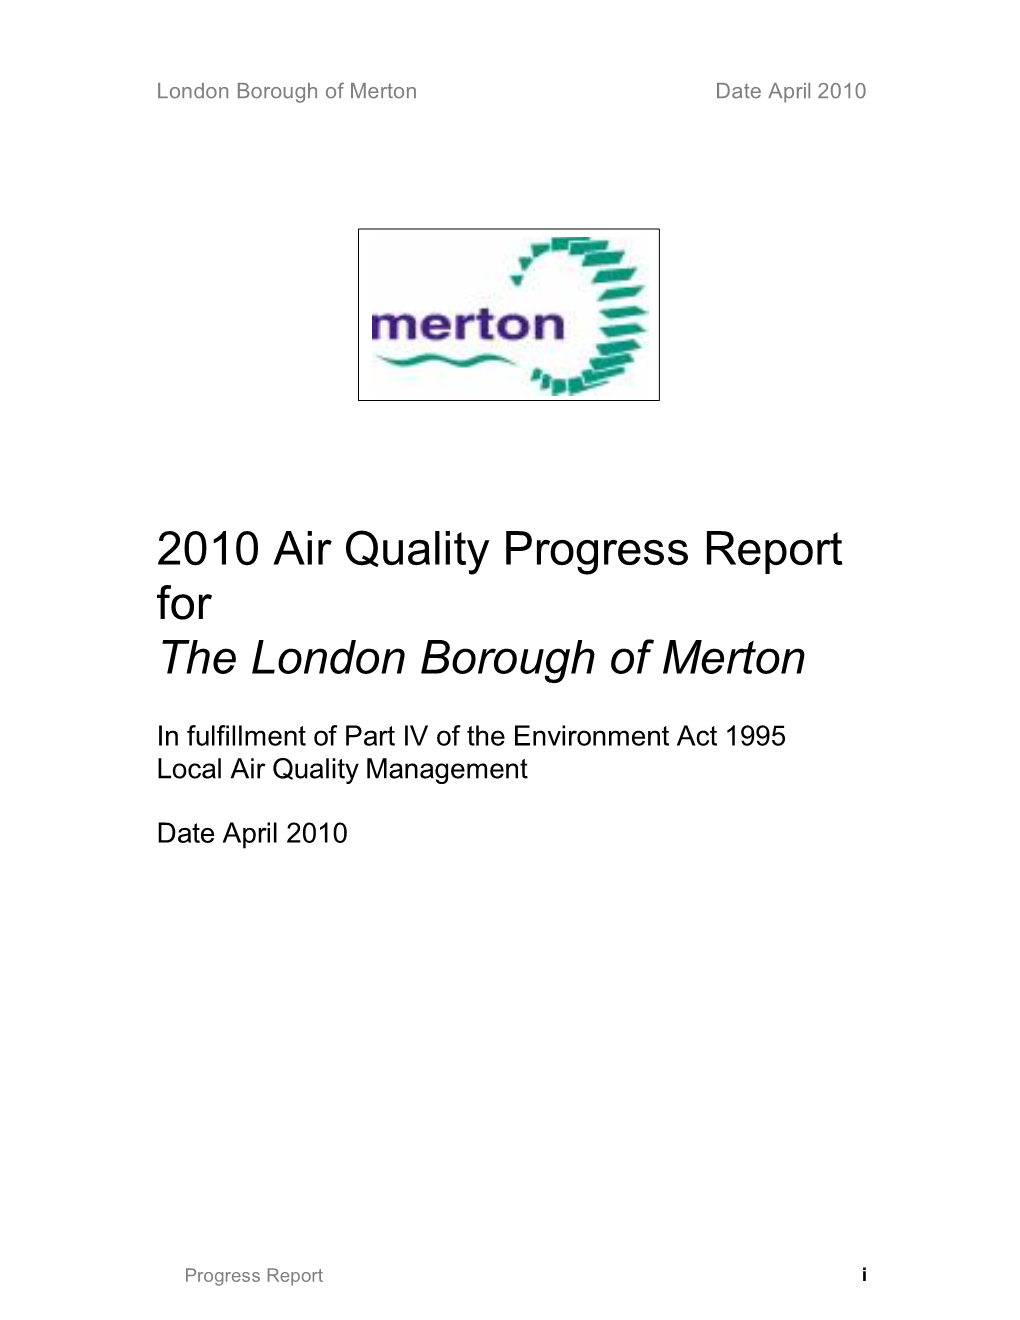 Merton Air Quality Progress Report 2010